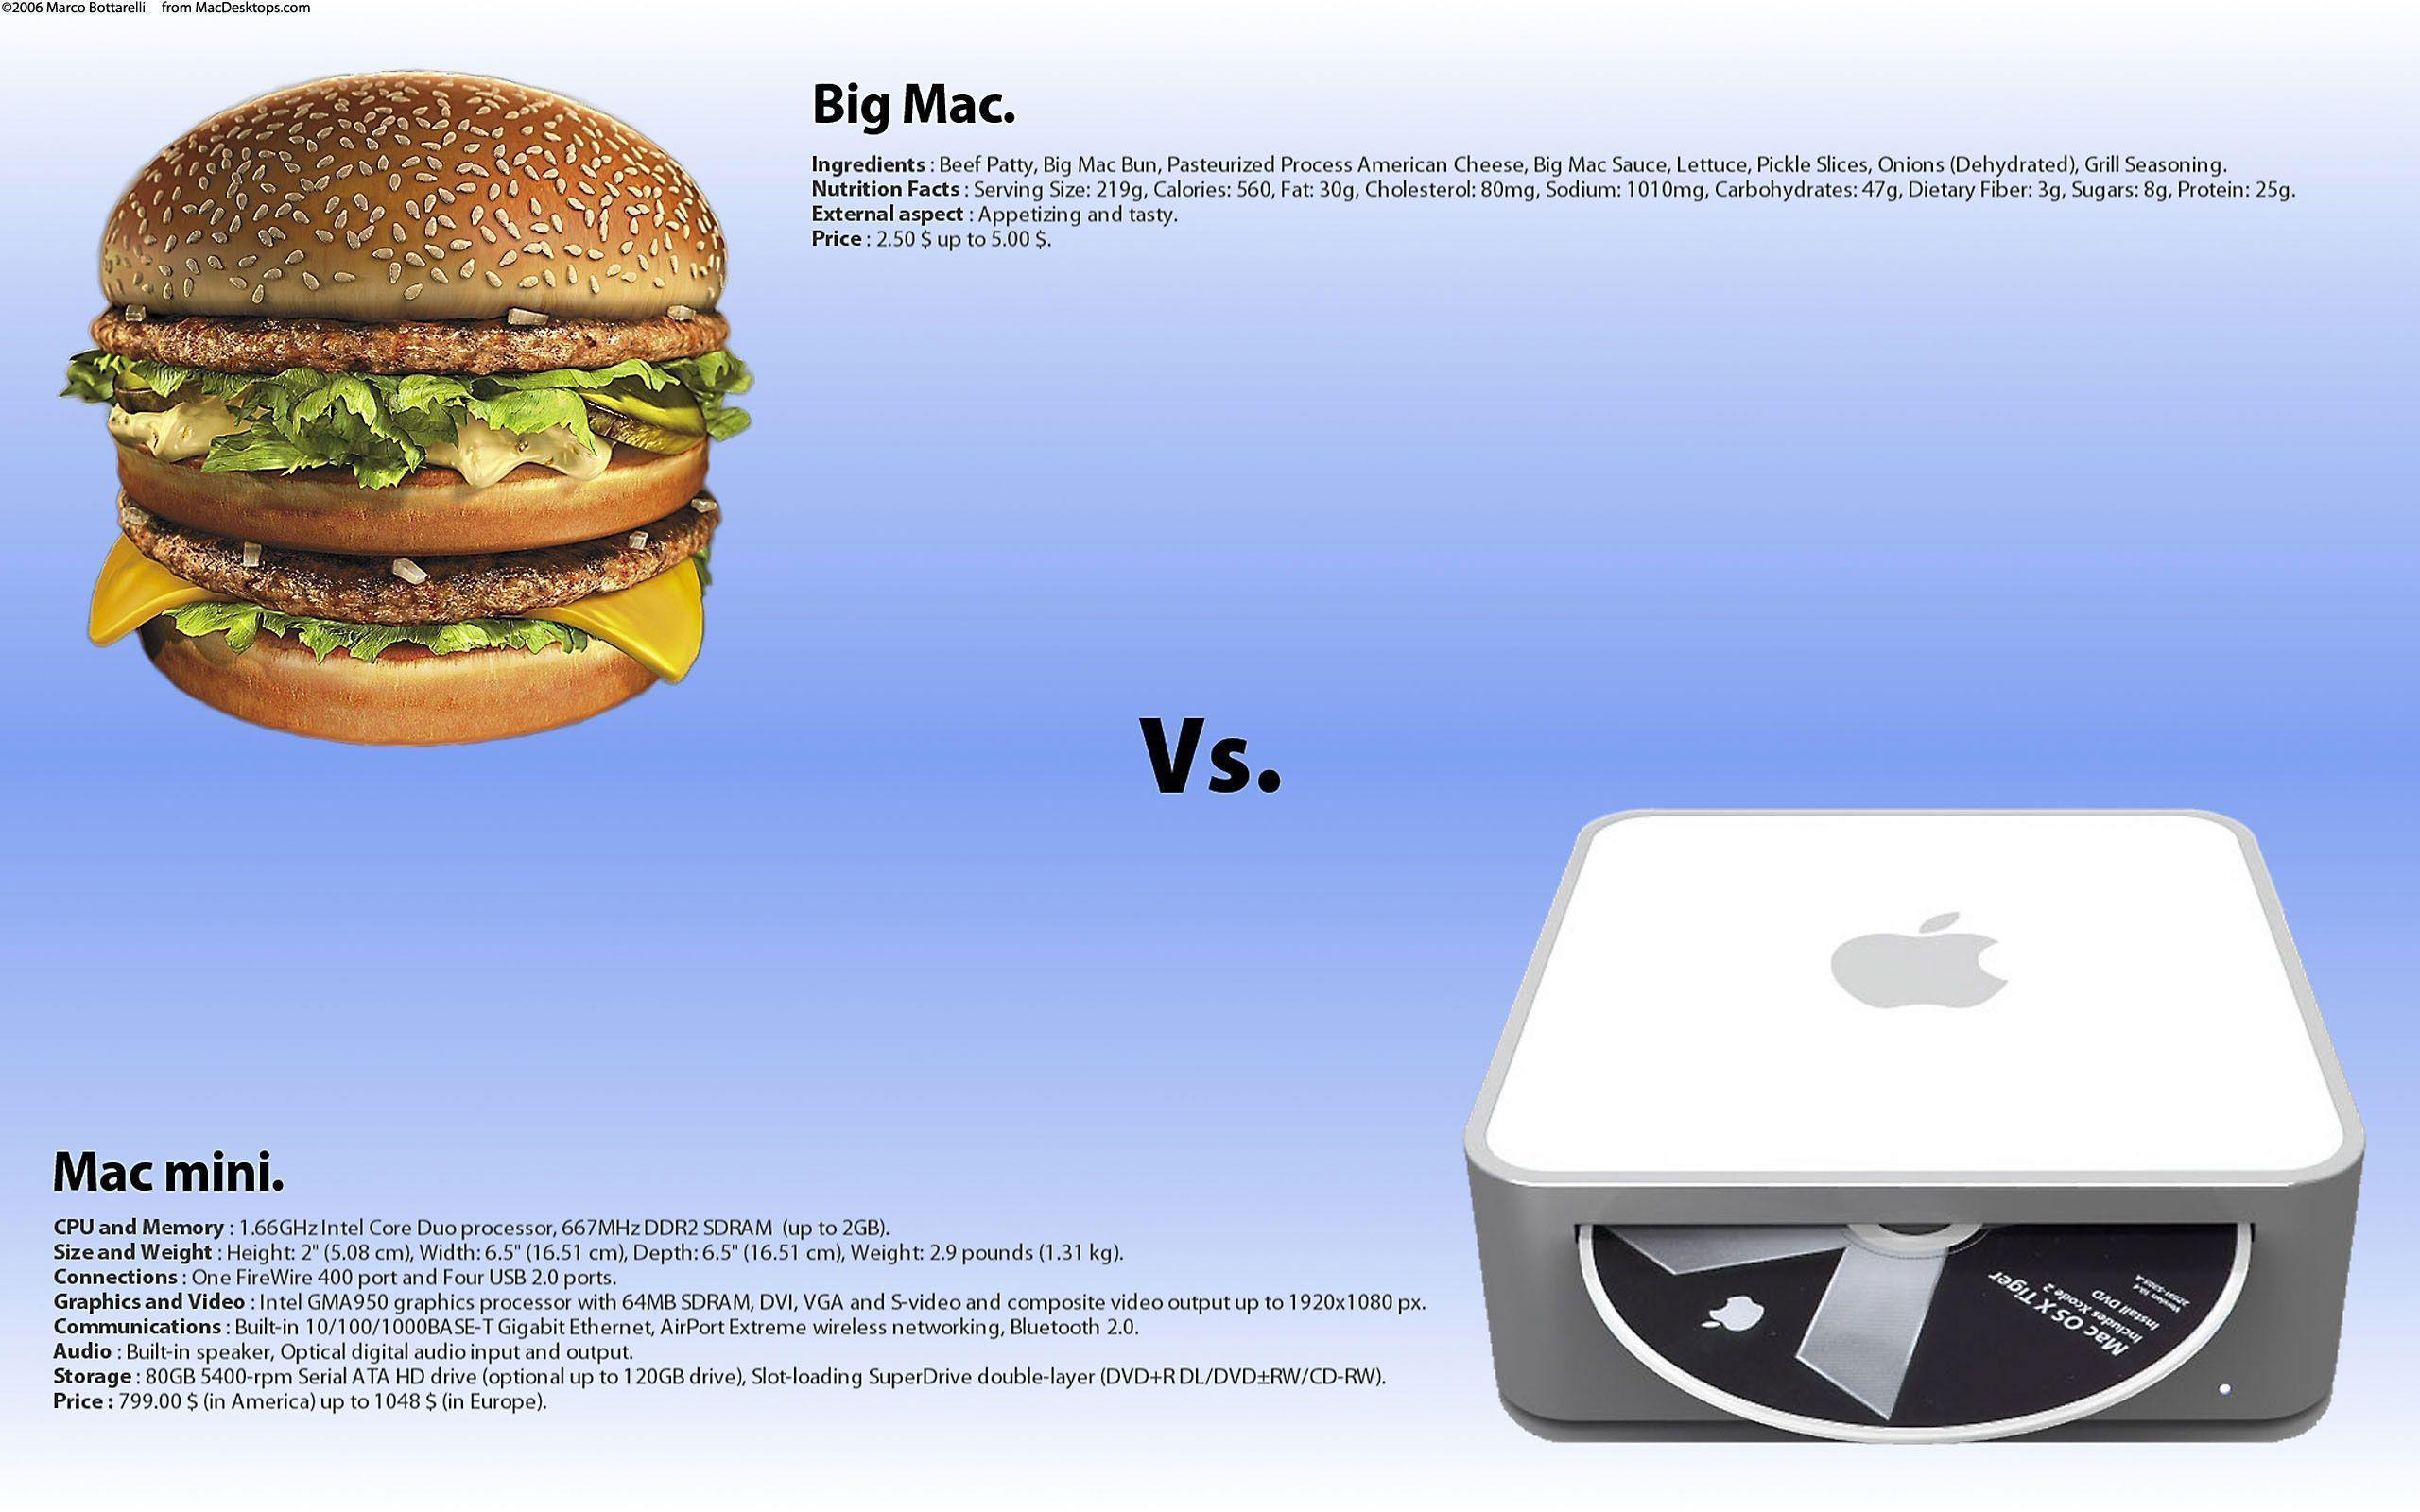 TR Forums • View topic.Big Mac vs. Mac Mini